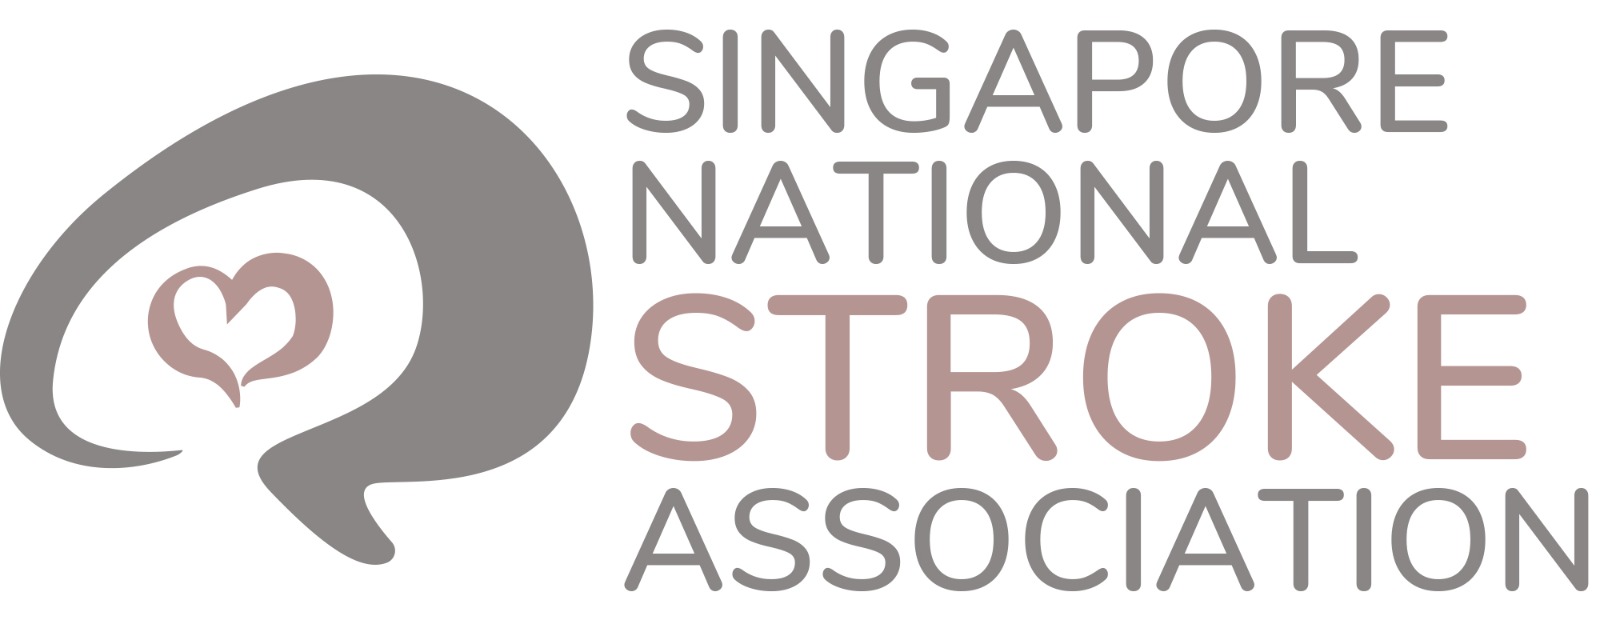 Singapore National Stroke Association logo